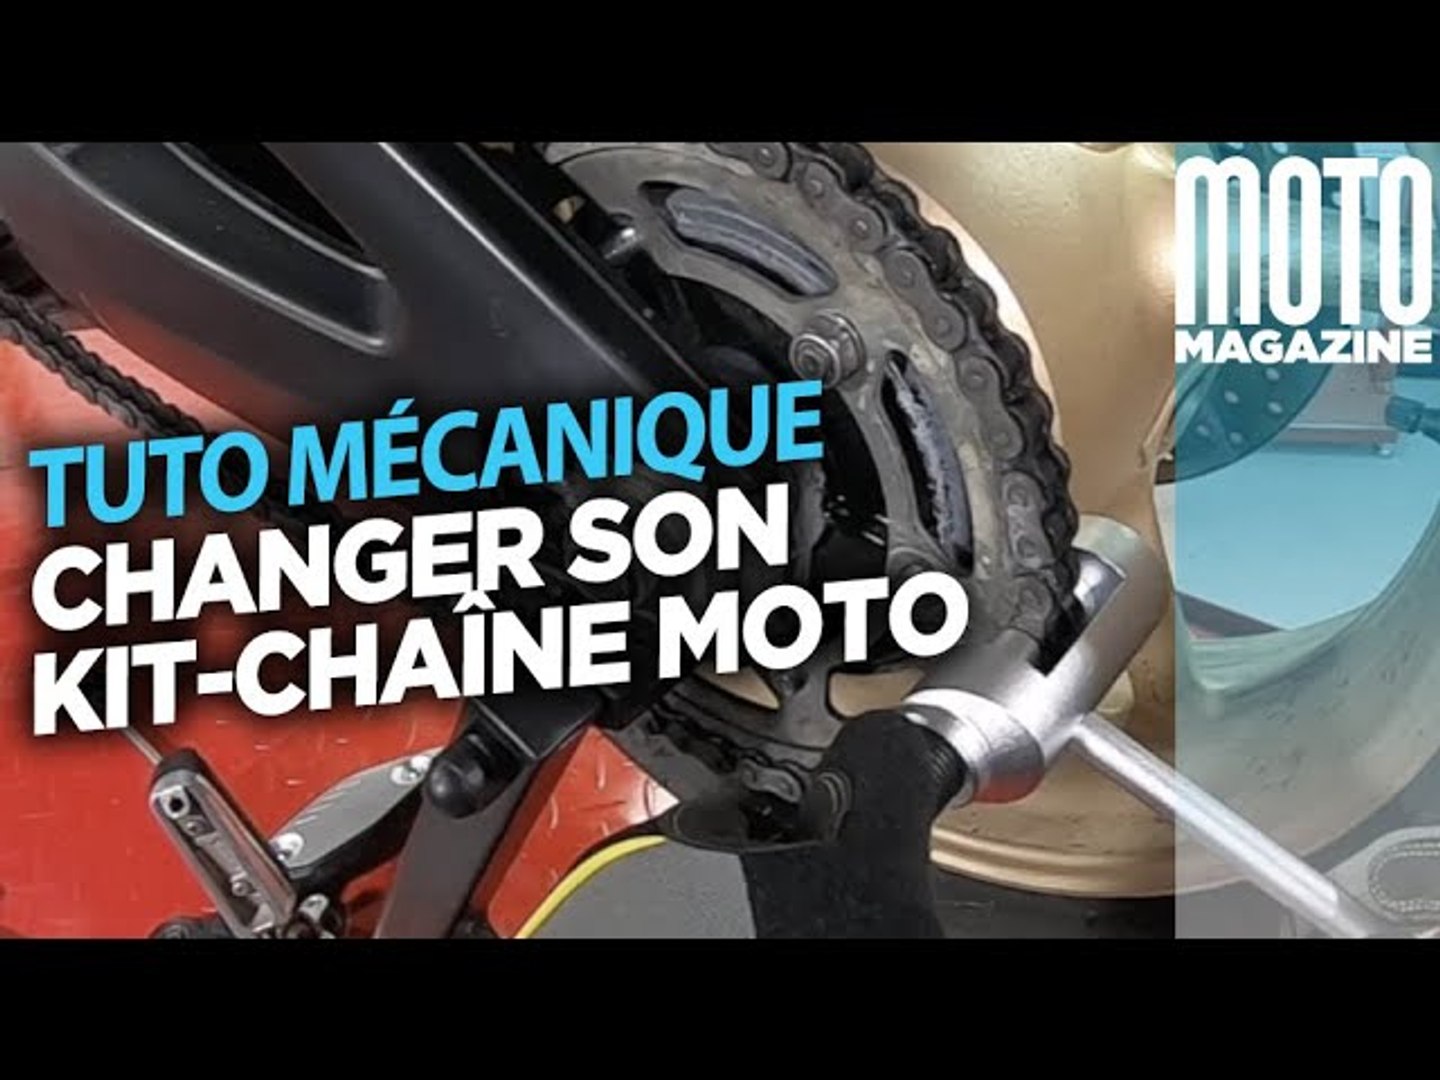 Changer son Kit chaine moto - Tuto Moto Magazine - Vidéo Dailymotion